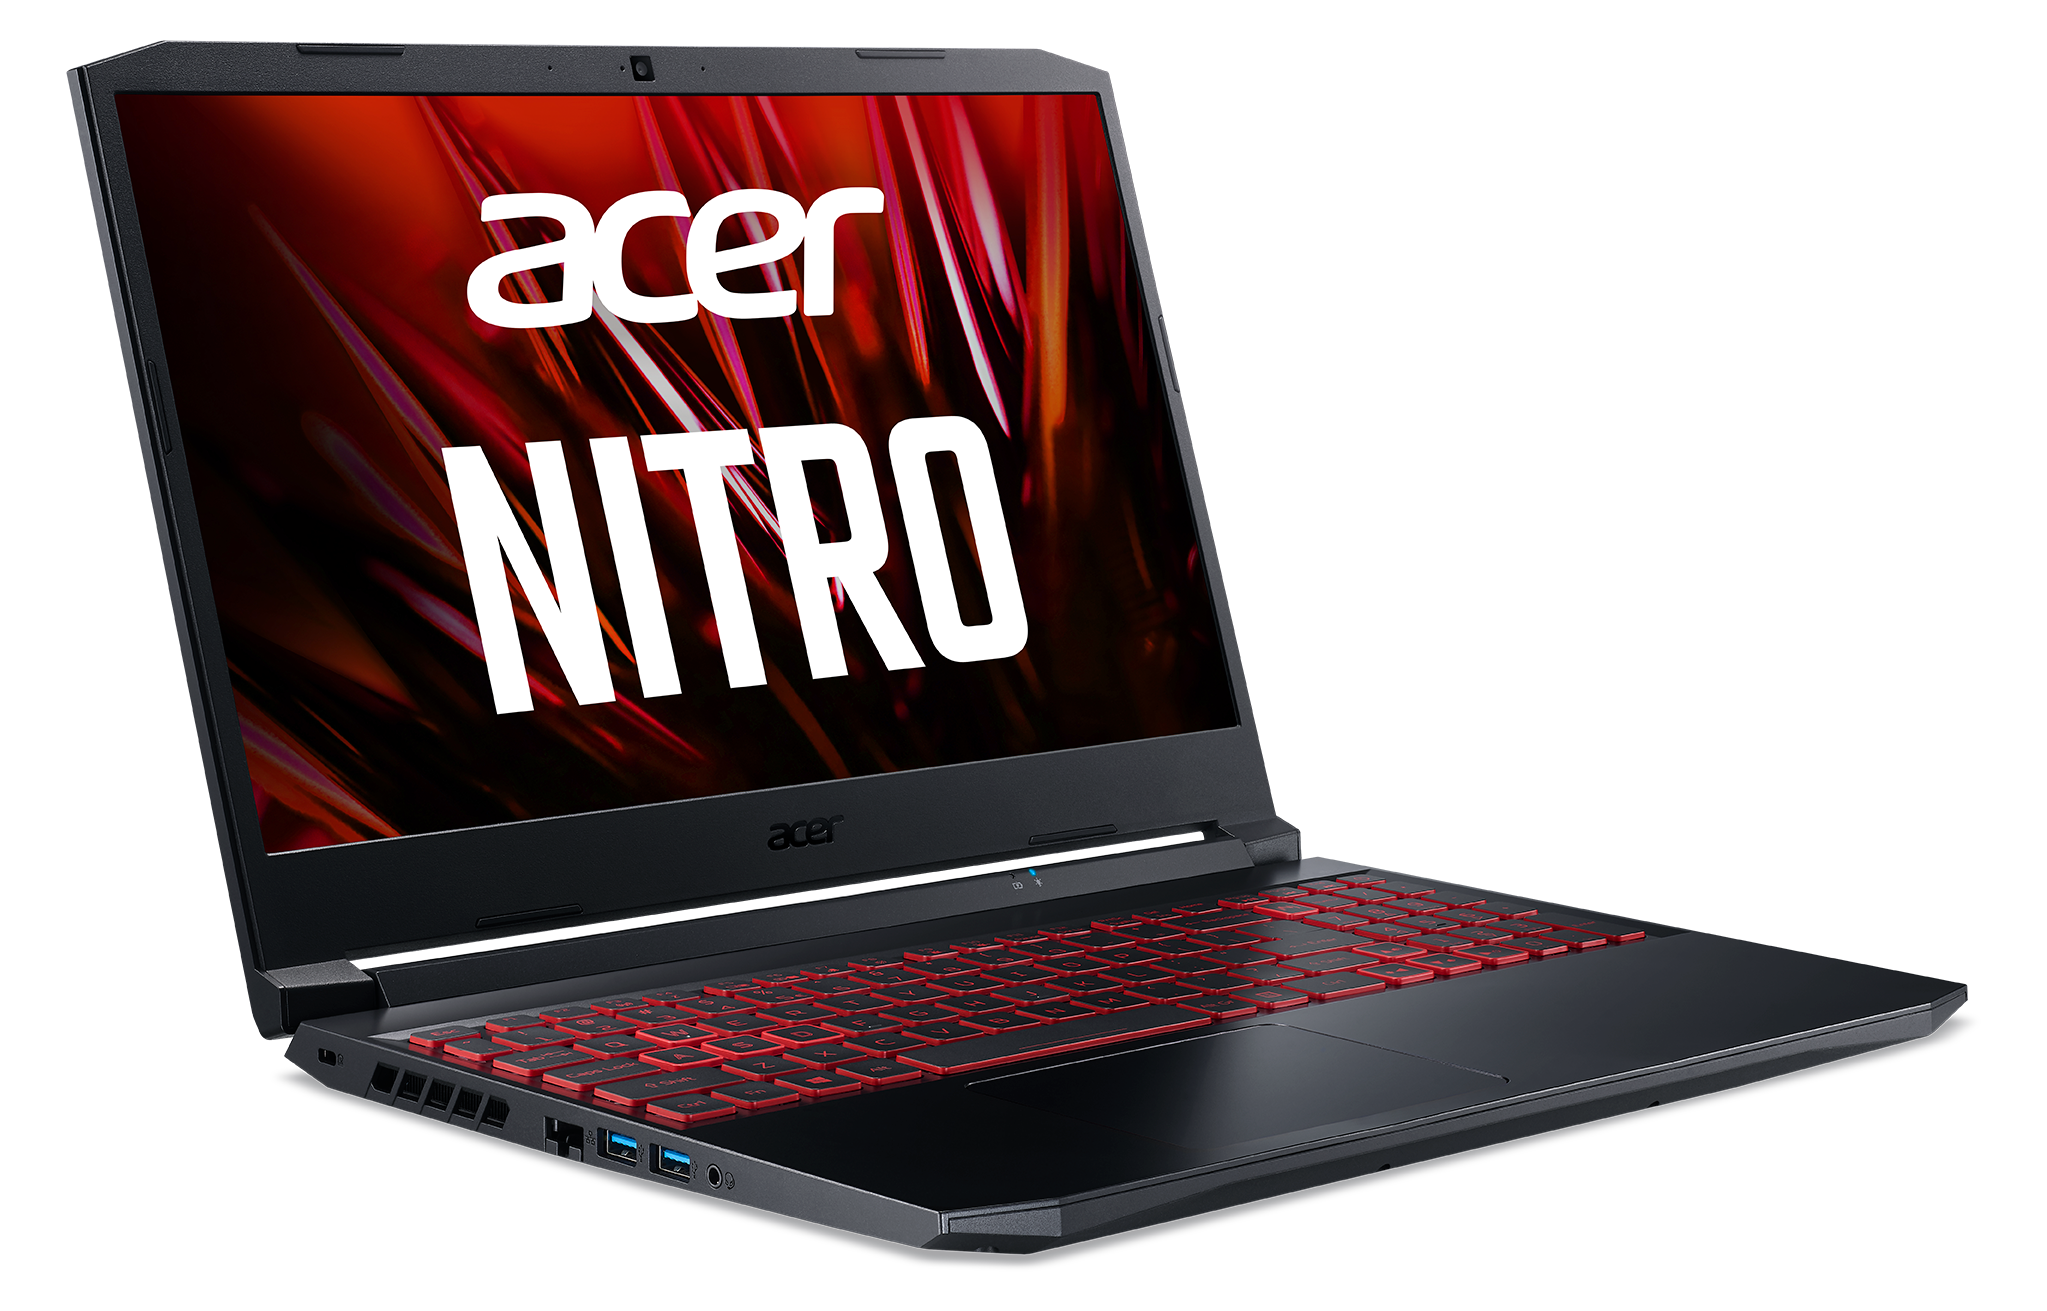 Acer Nitro 5 rtx 3080